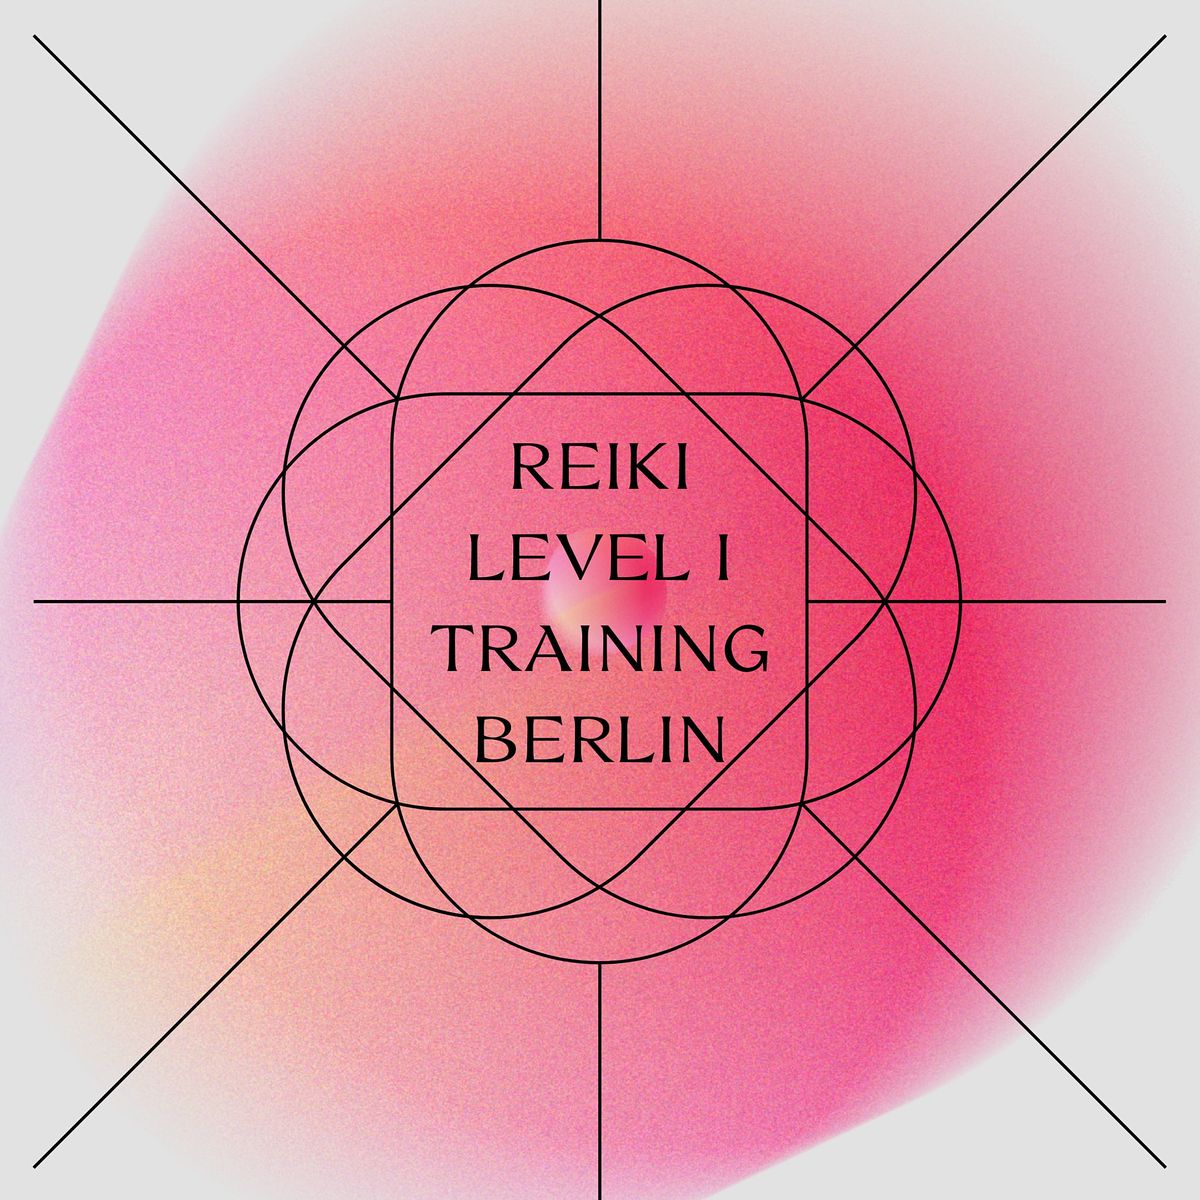 Reiki Level I Training - Berlin